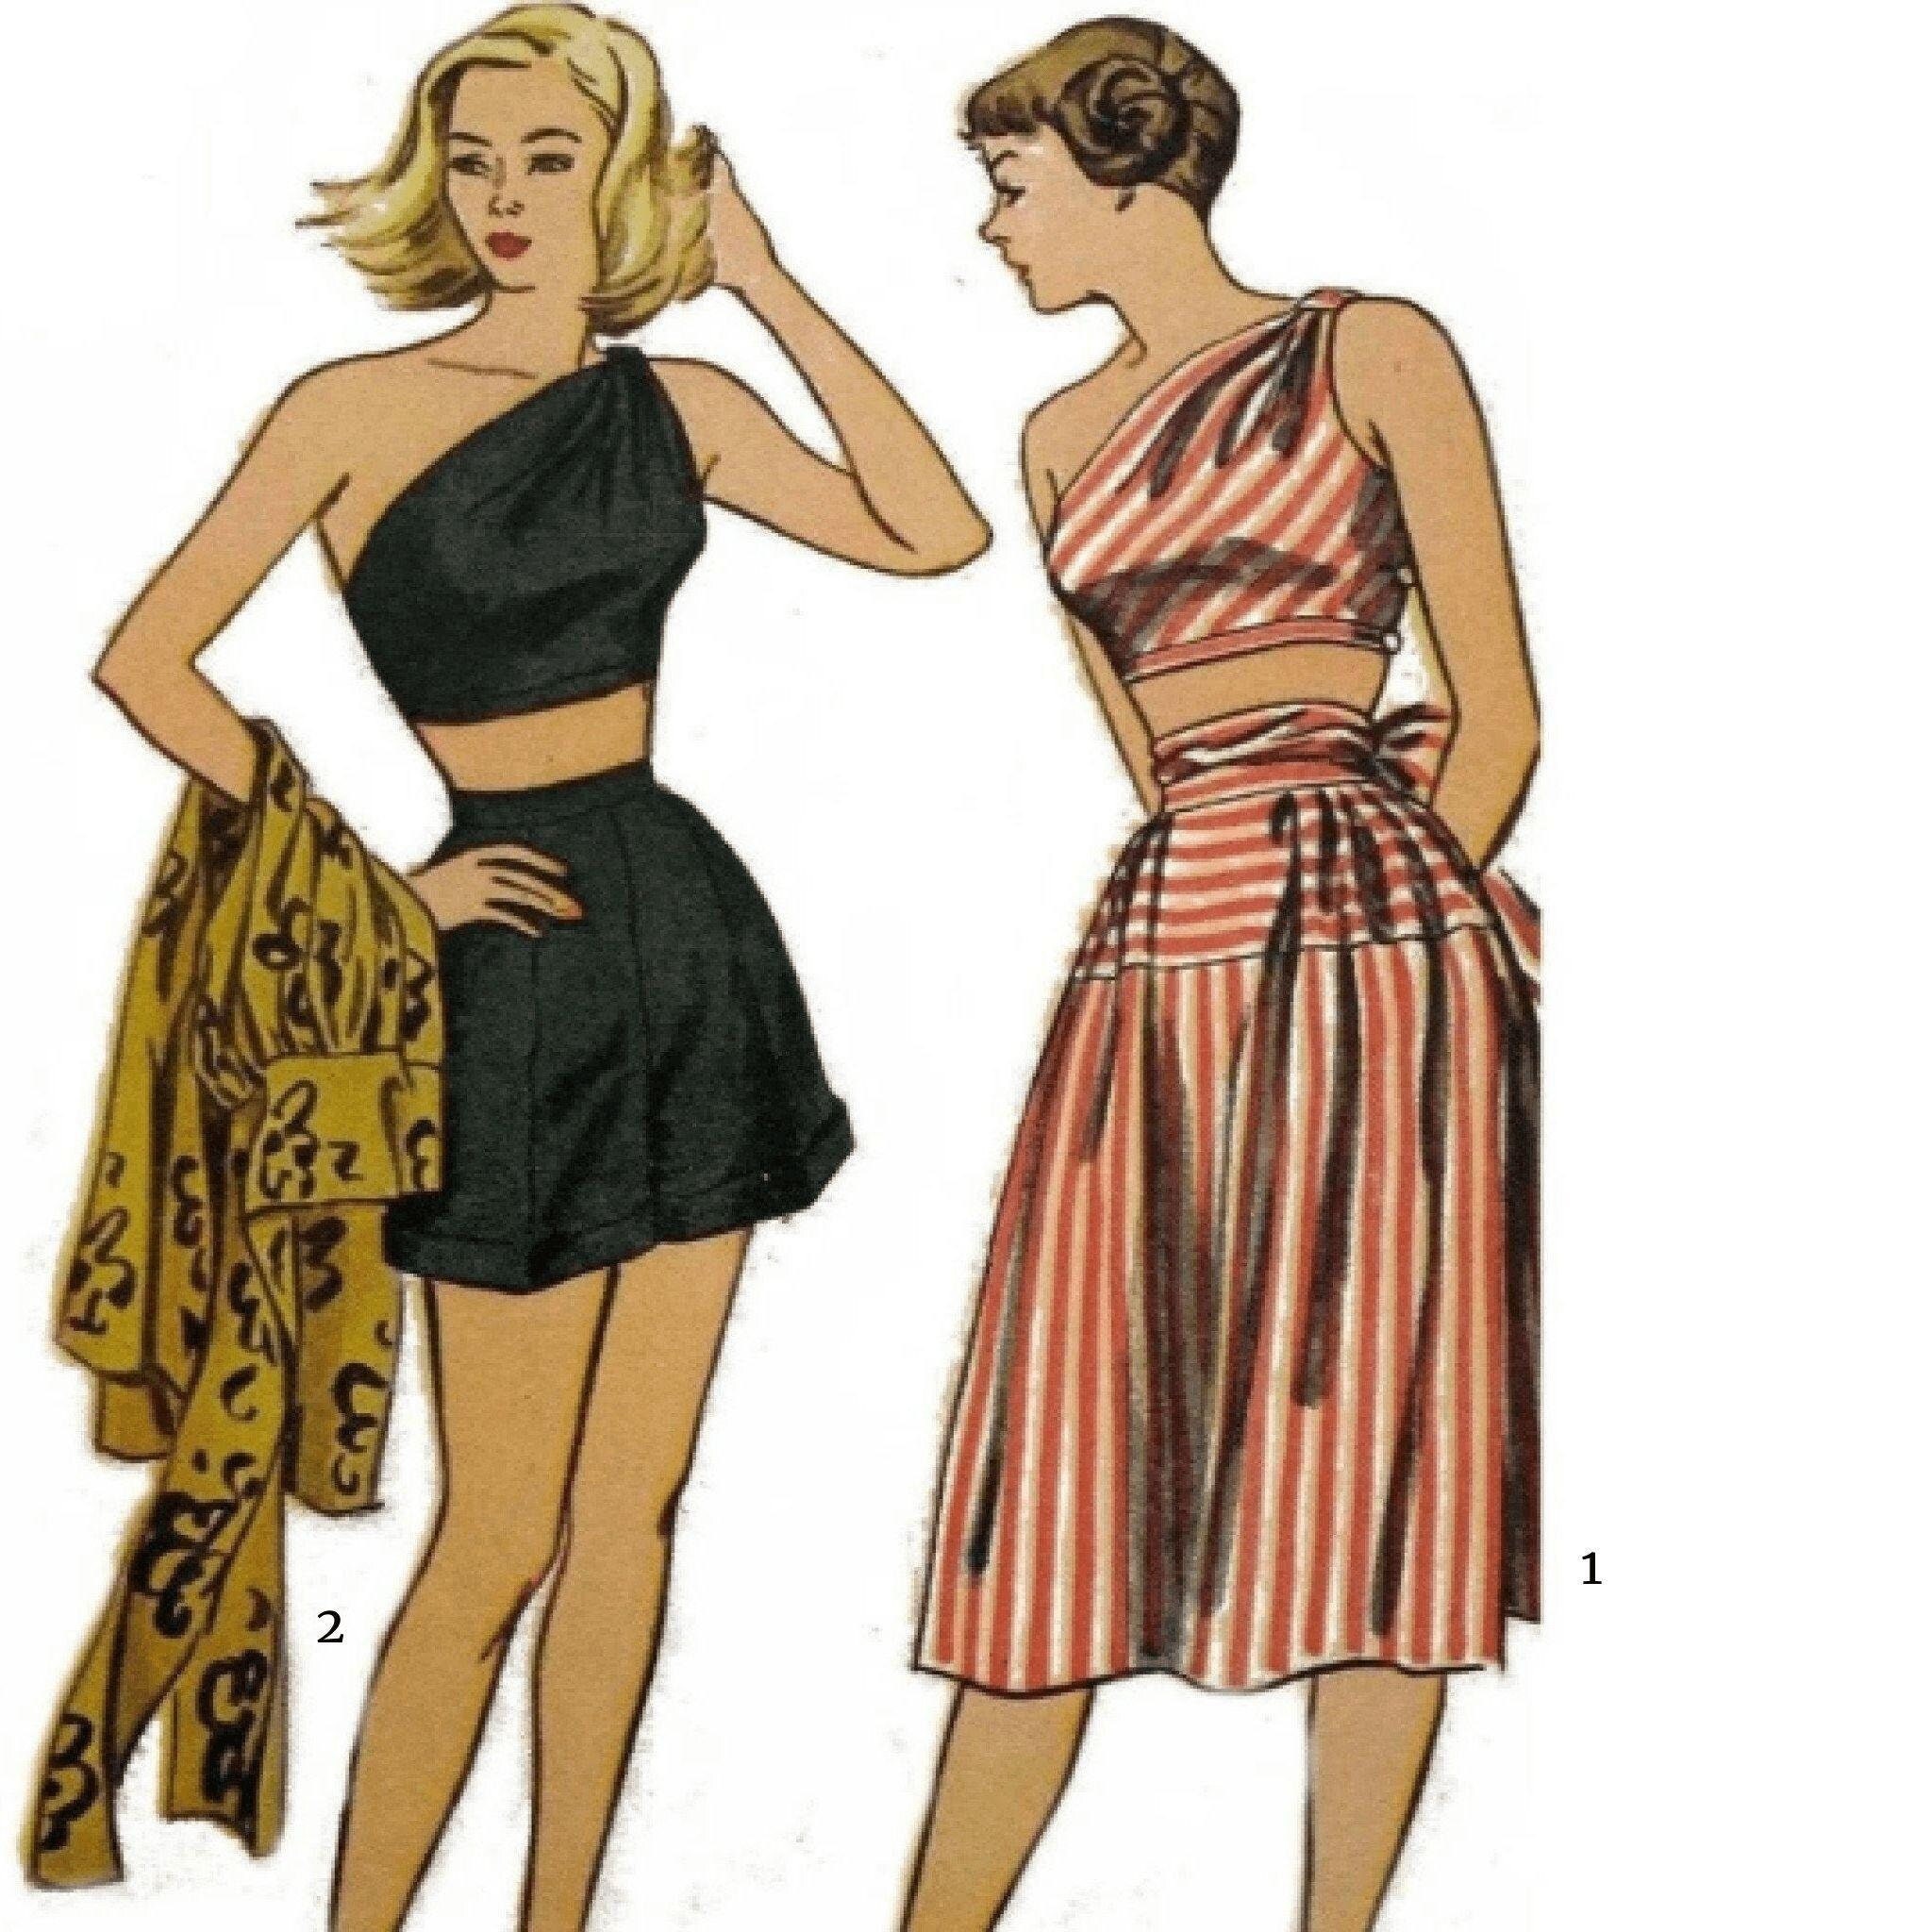 1953 Vintage Sewing Pattern B30 BRA TOPS 1220 by Simplicity 4333